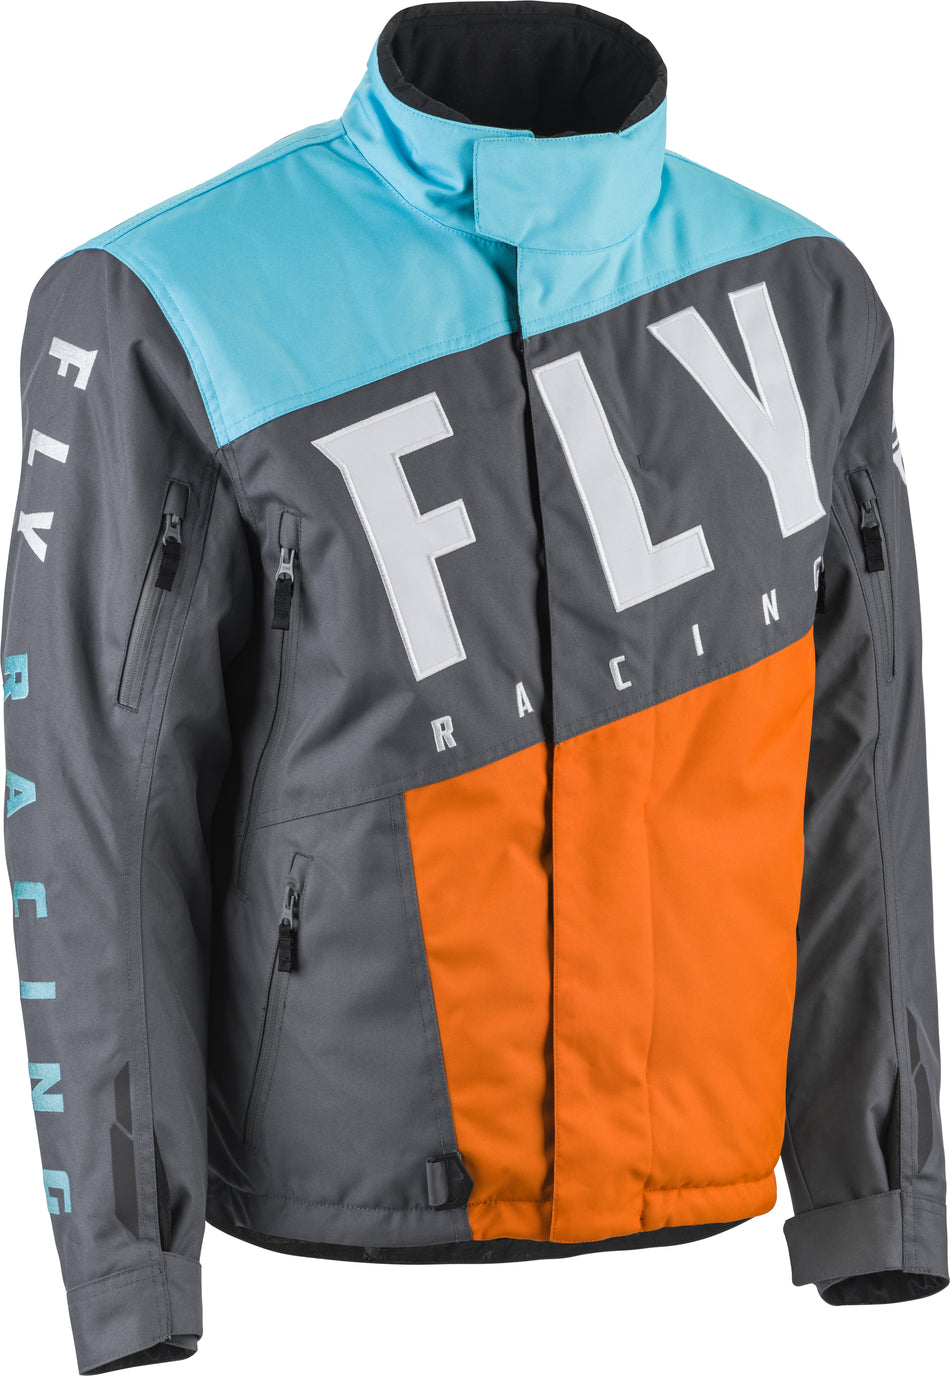 FLY RACING Snx Pro Jacket Orange/Light Blue/Black 2x 470-41142X